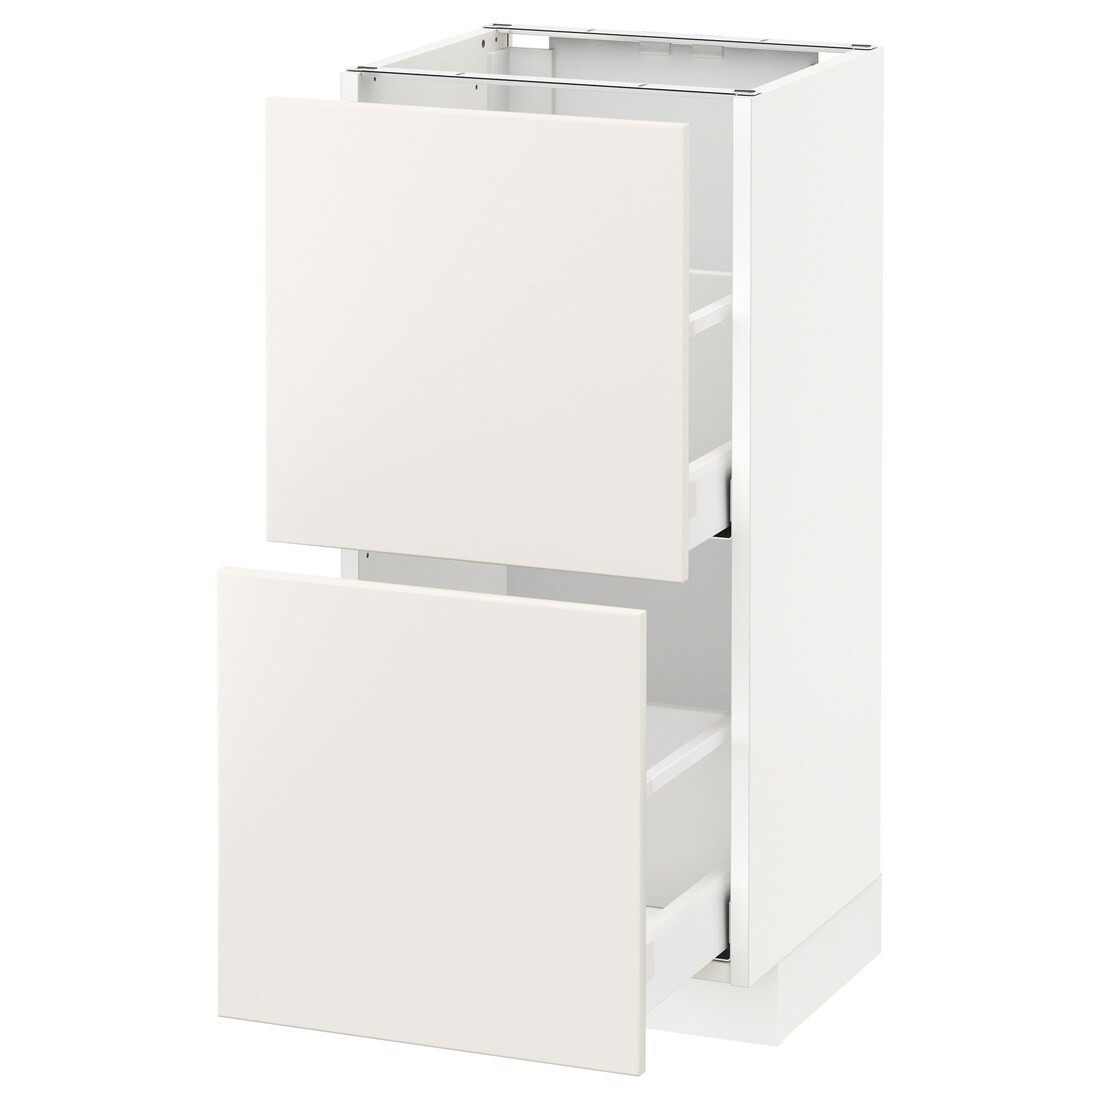 IKEA METOD МЕТОД / MAXIMERA МАКСИМЕРА Шкаф / 2 ящика, белый / Veddinge белый, 40x37 см 39051418 | 390.514.18